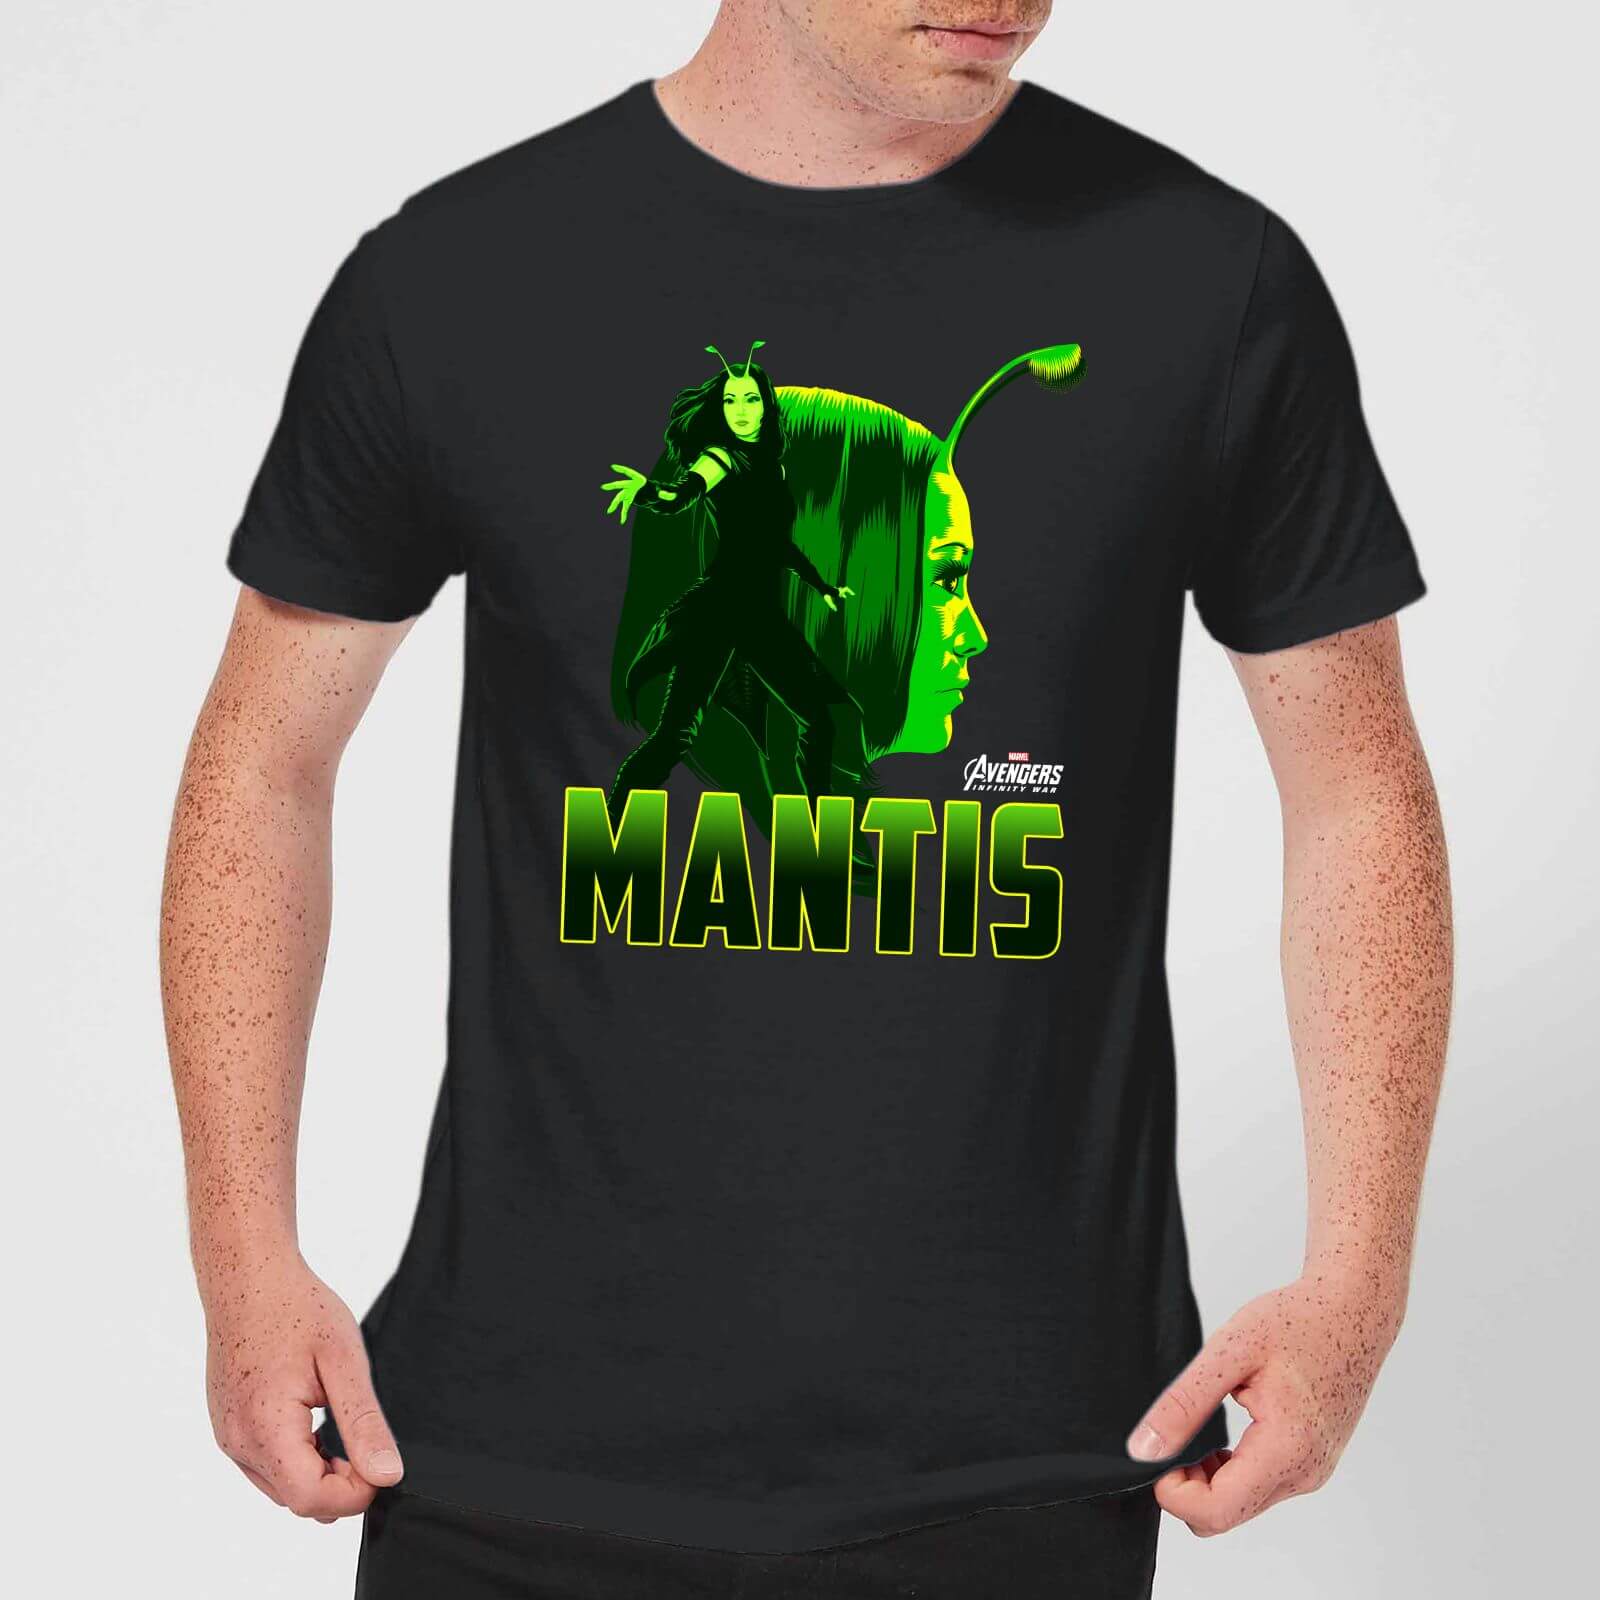 Avengers Mantis Men's T-Shirt - Black - 4XL - Black